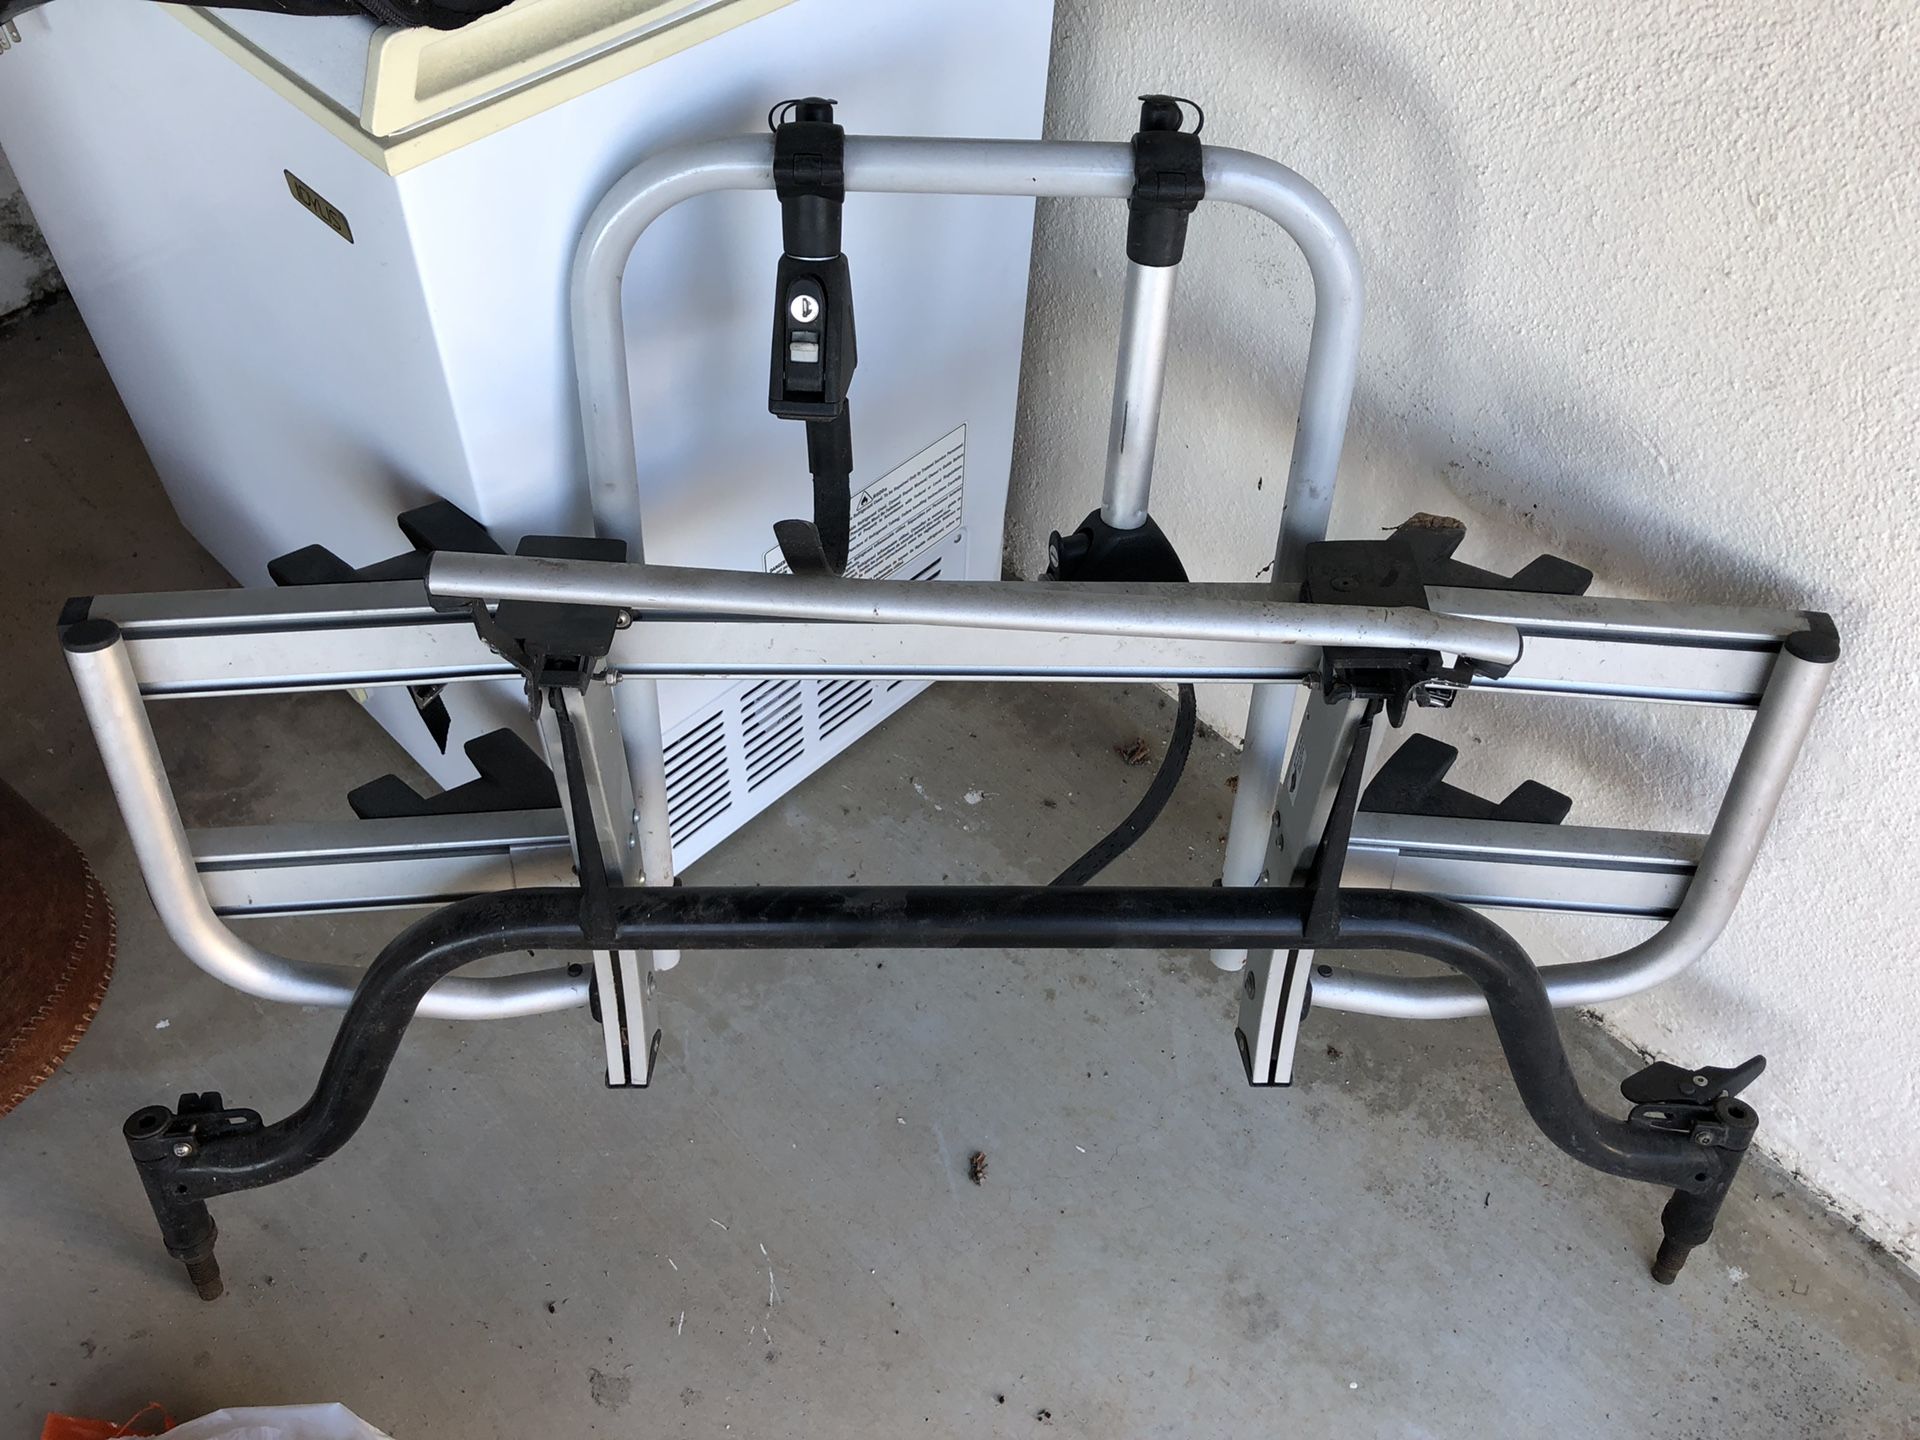 Mini Countryman rear mounted bike rack